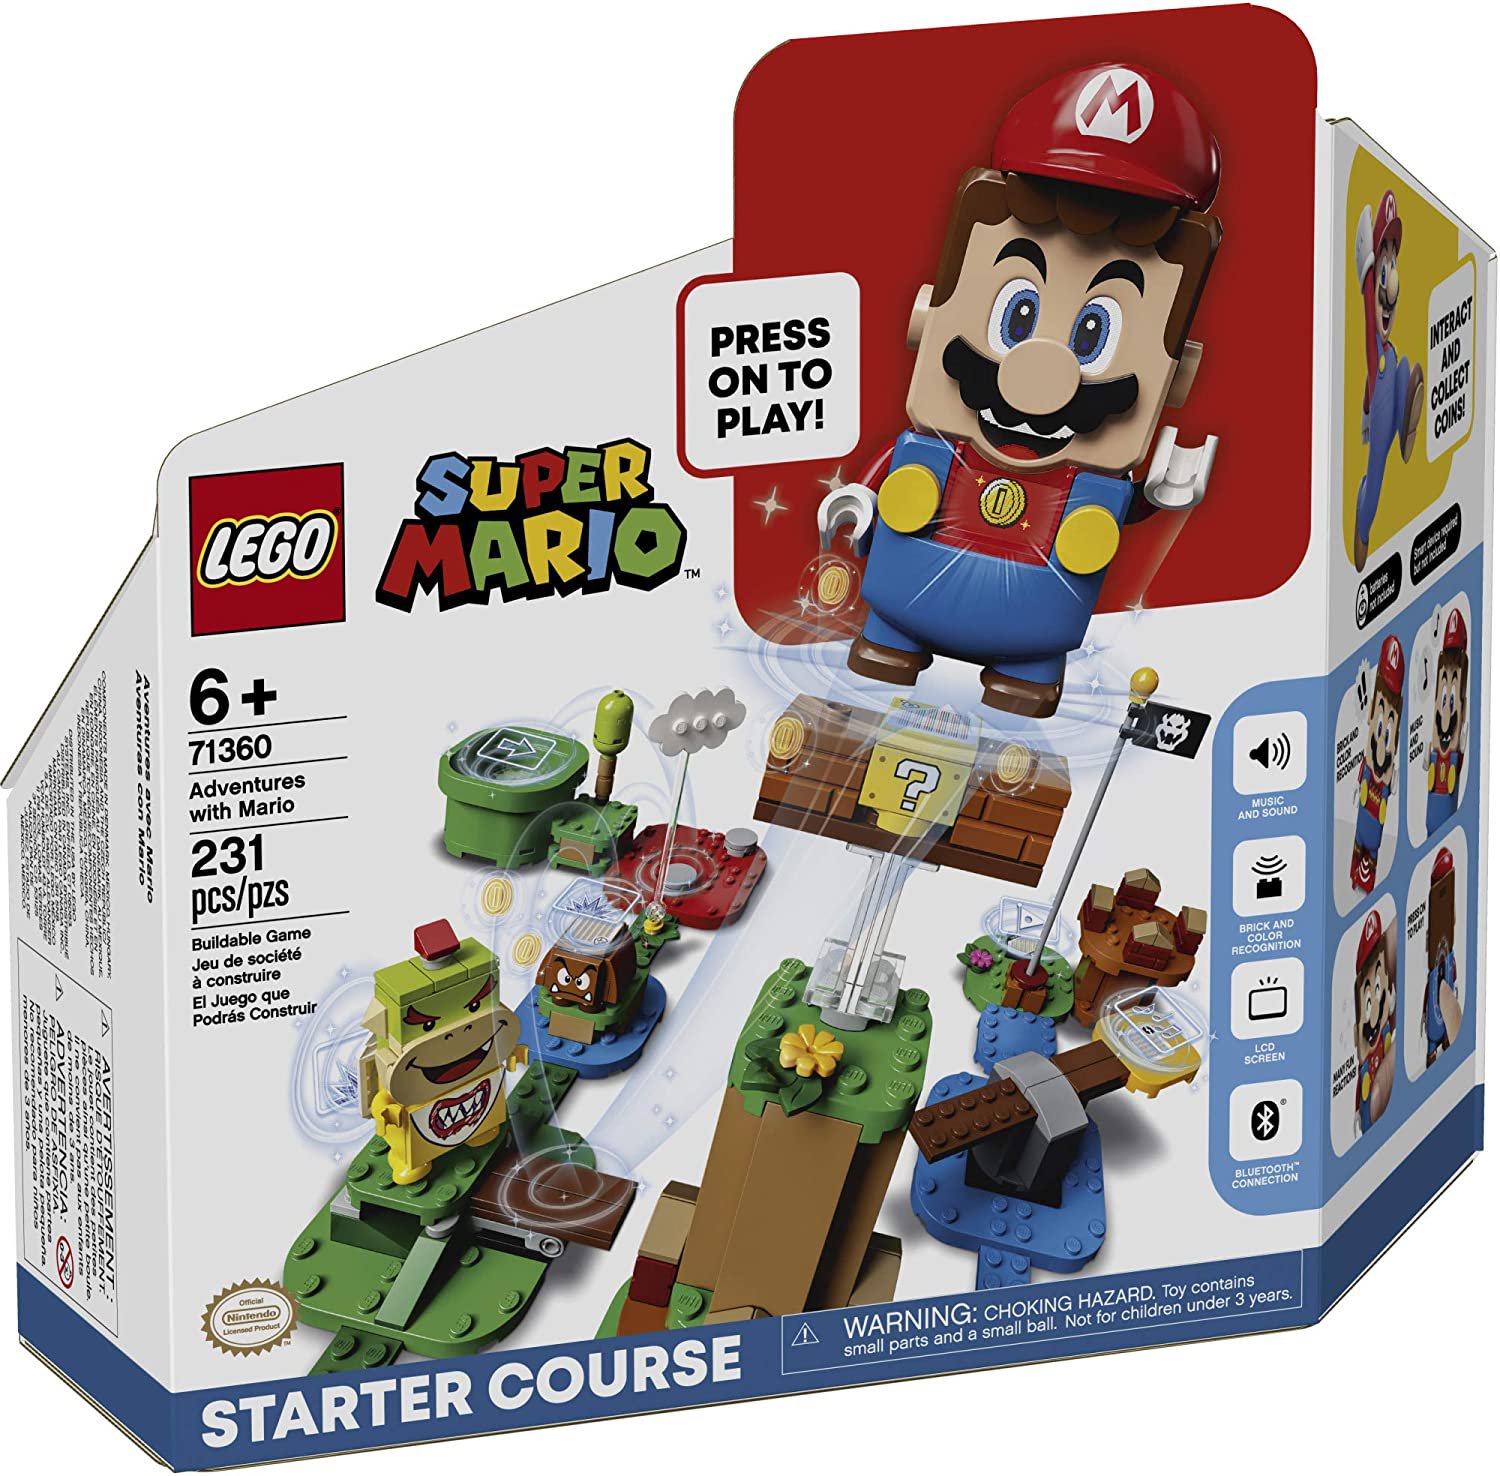 LEGO Super Mario Adventures with Mario Starter Course 71360 Building Kit - 231 Pieces